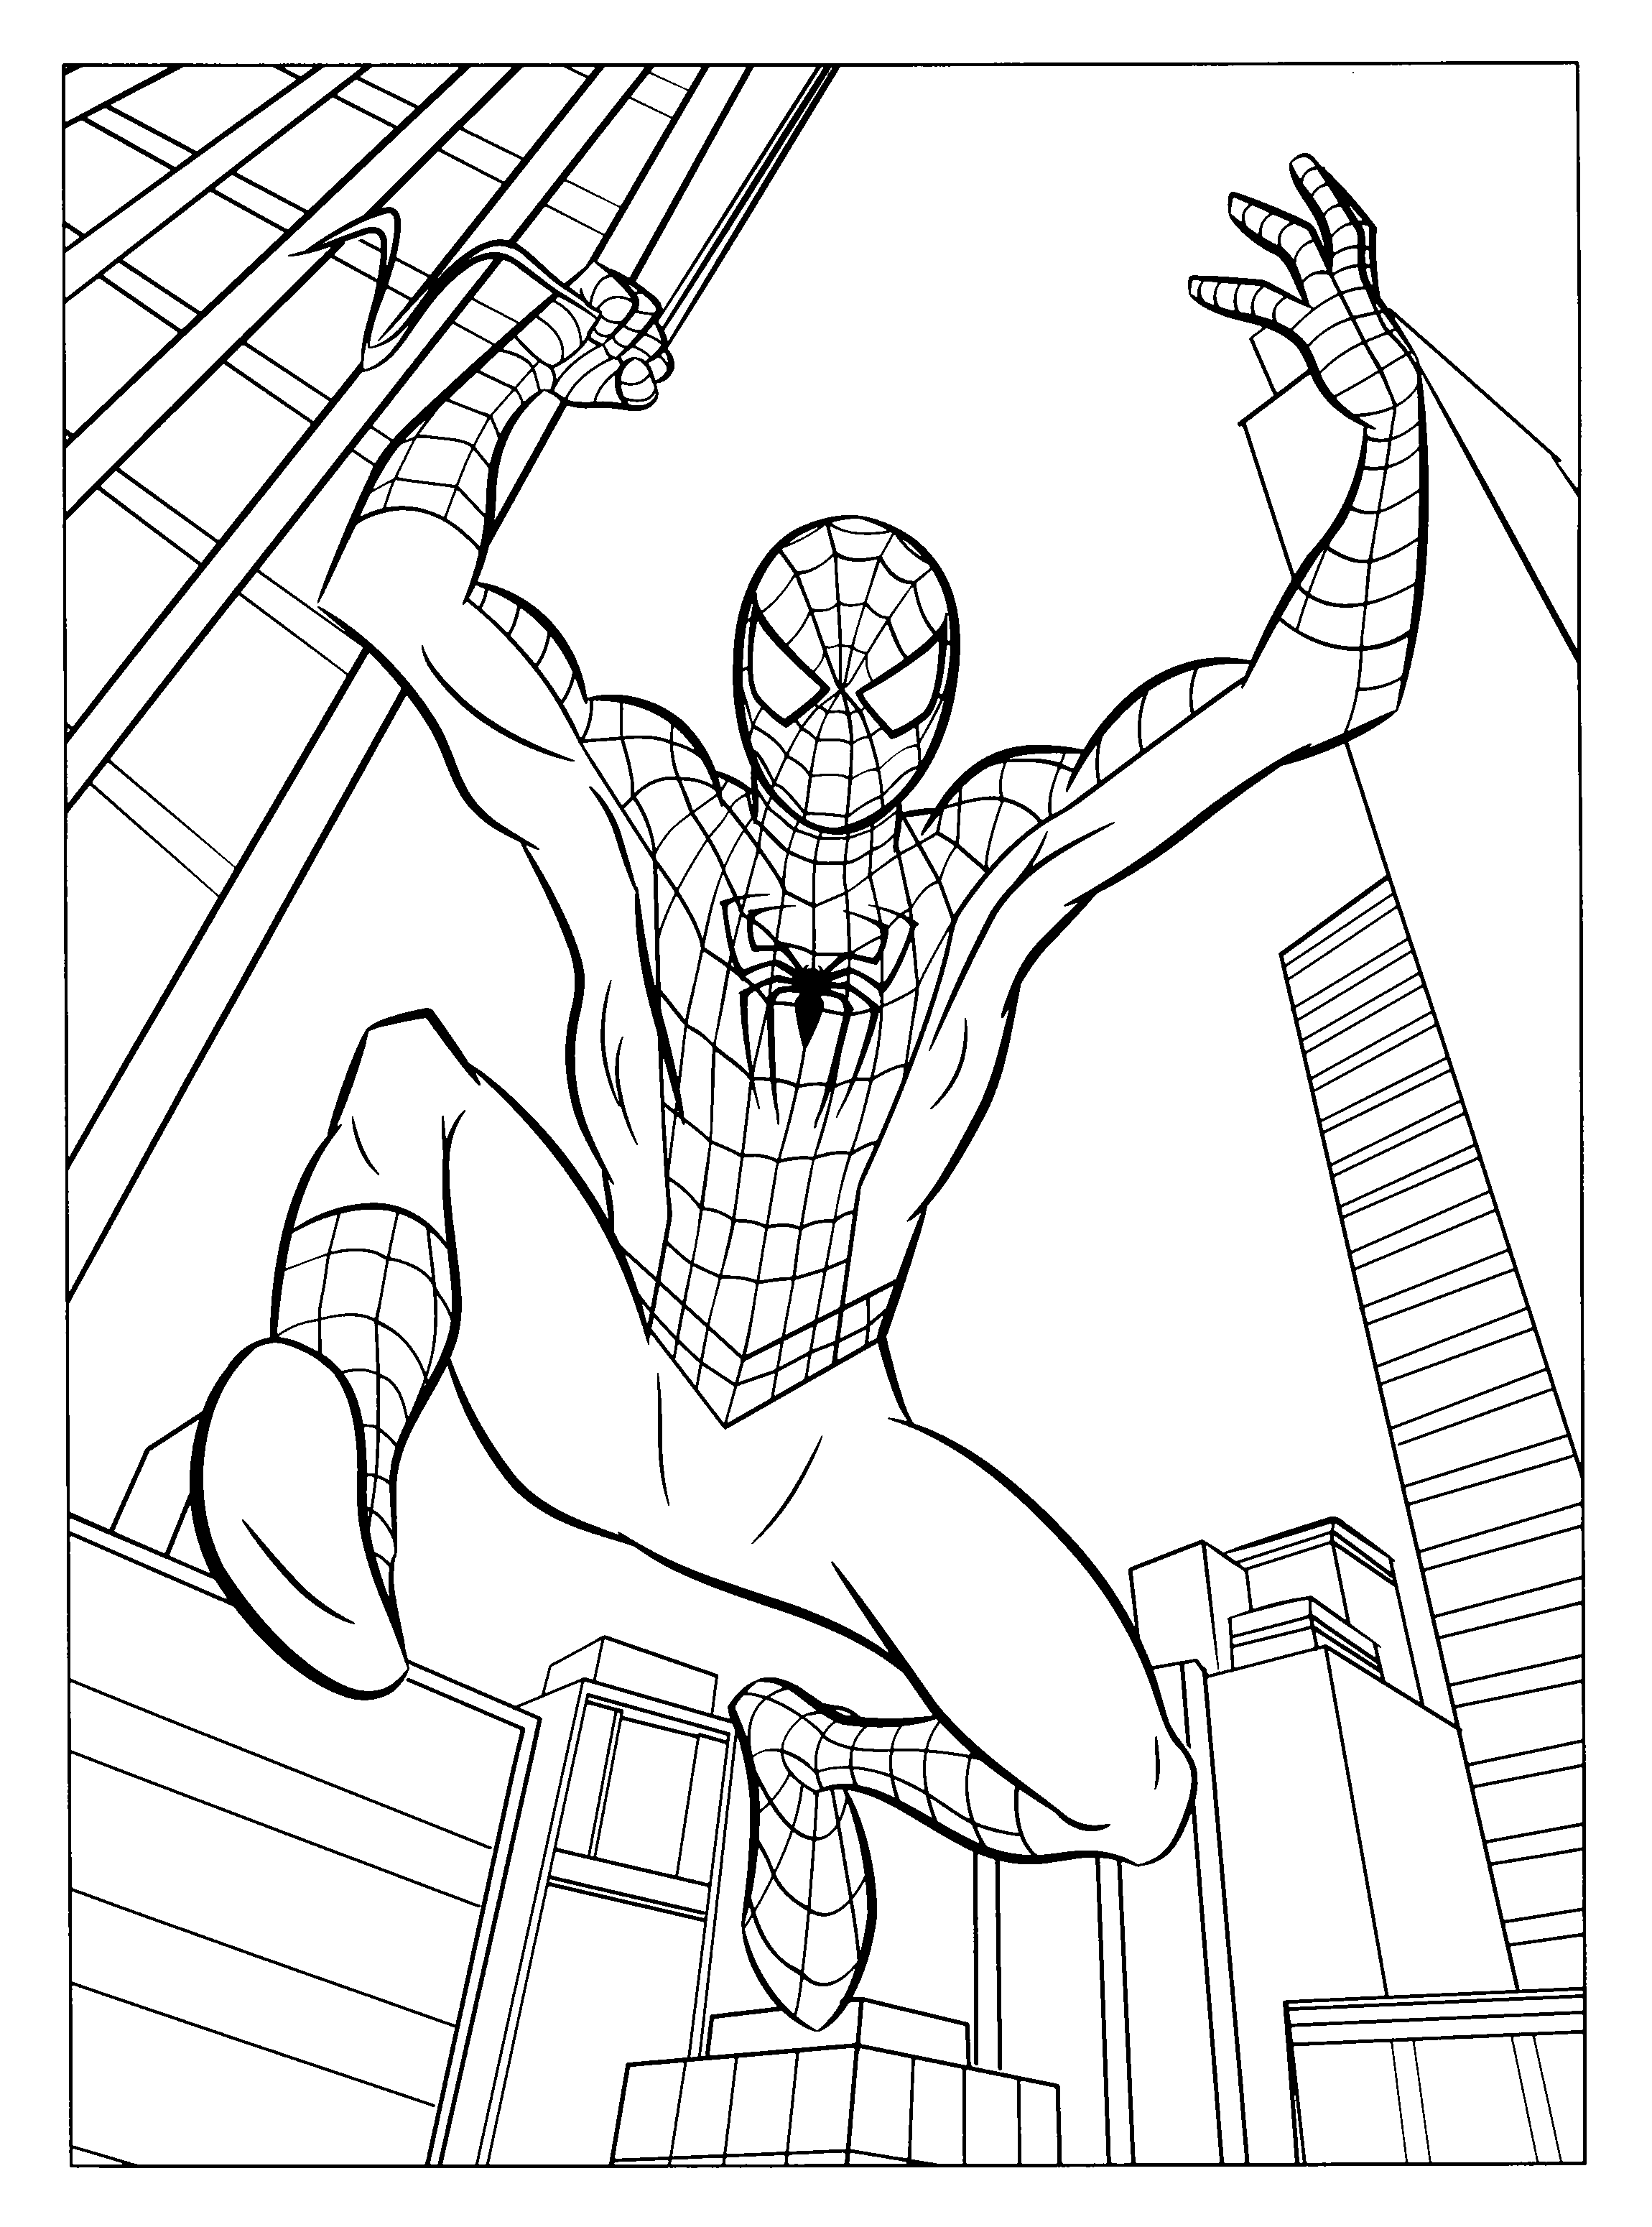 phoà dessineriage spiderman : image gratuite coloriage spiderman